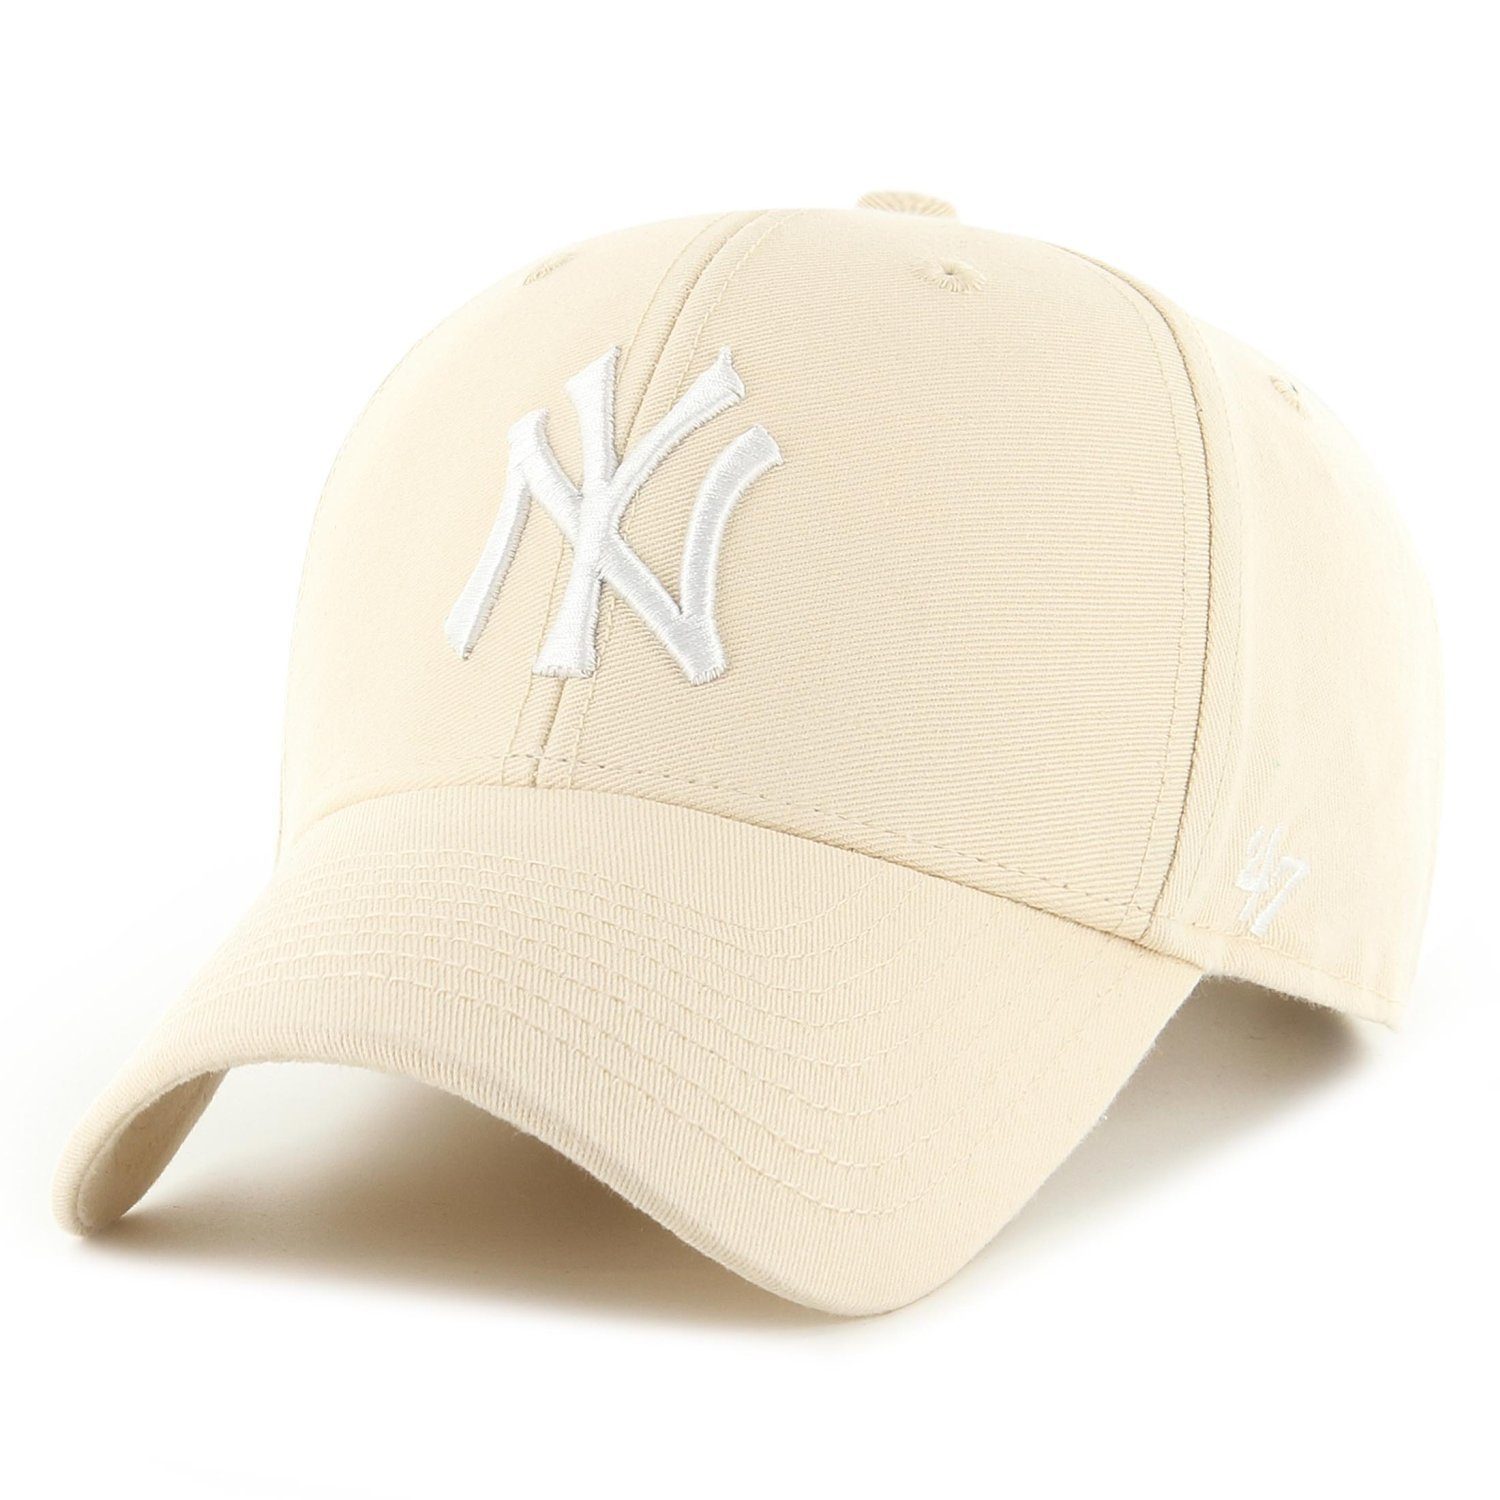 New Relaxed Brand Cap Baseball LEGEND Fit York '47 Yankees